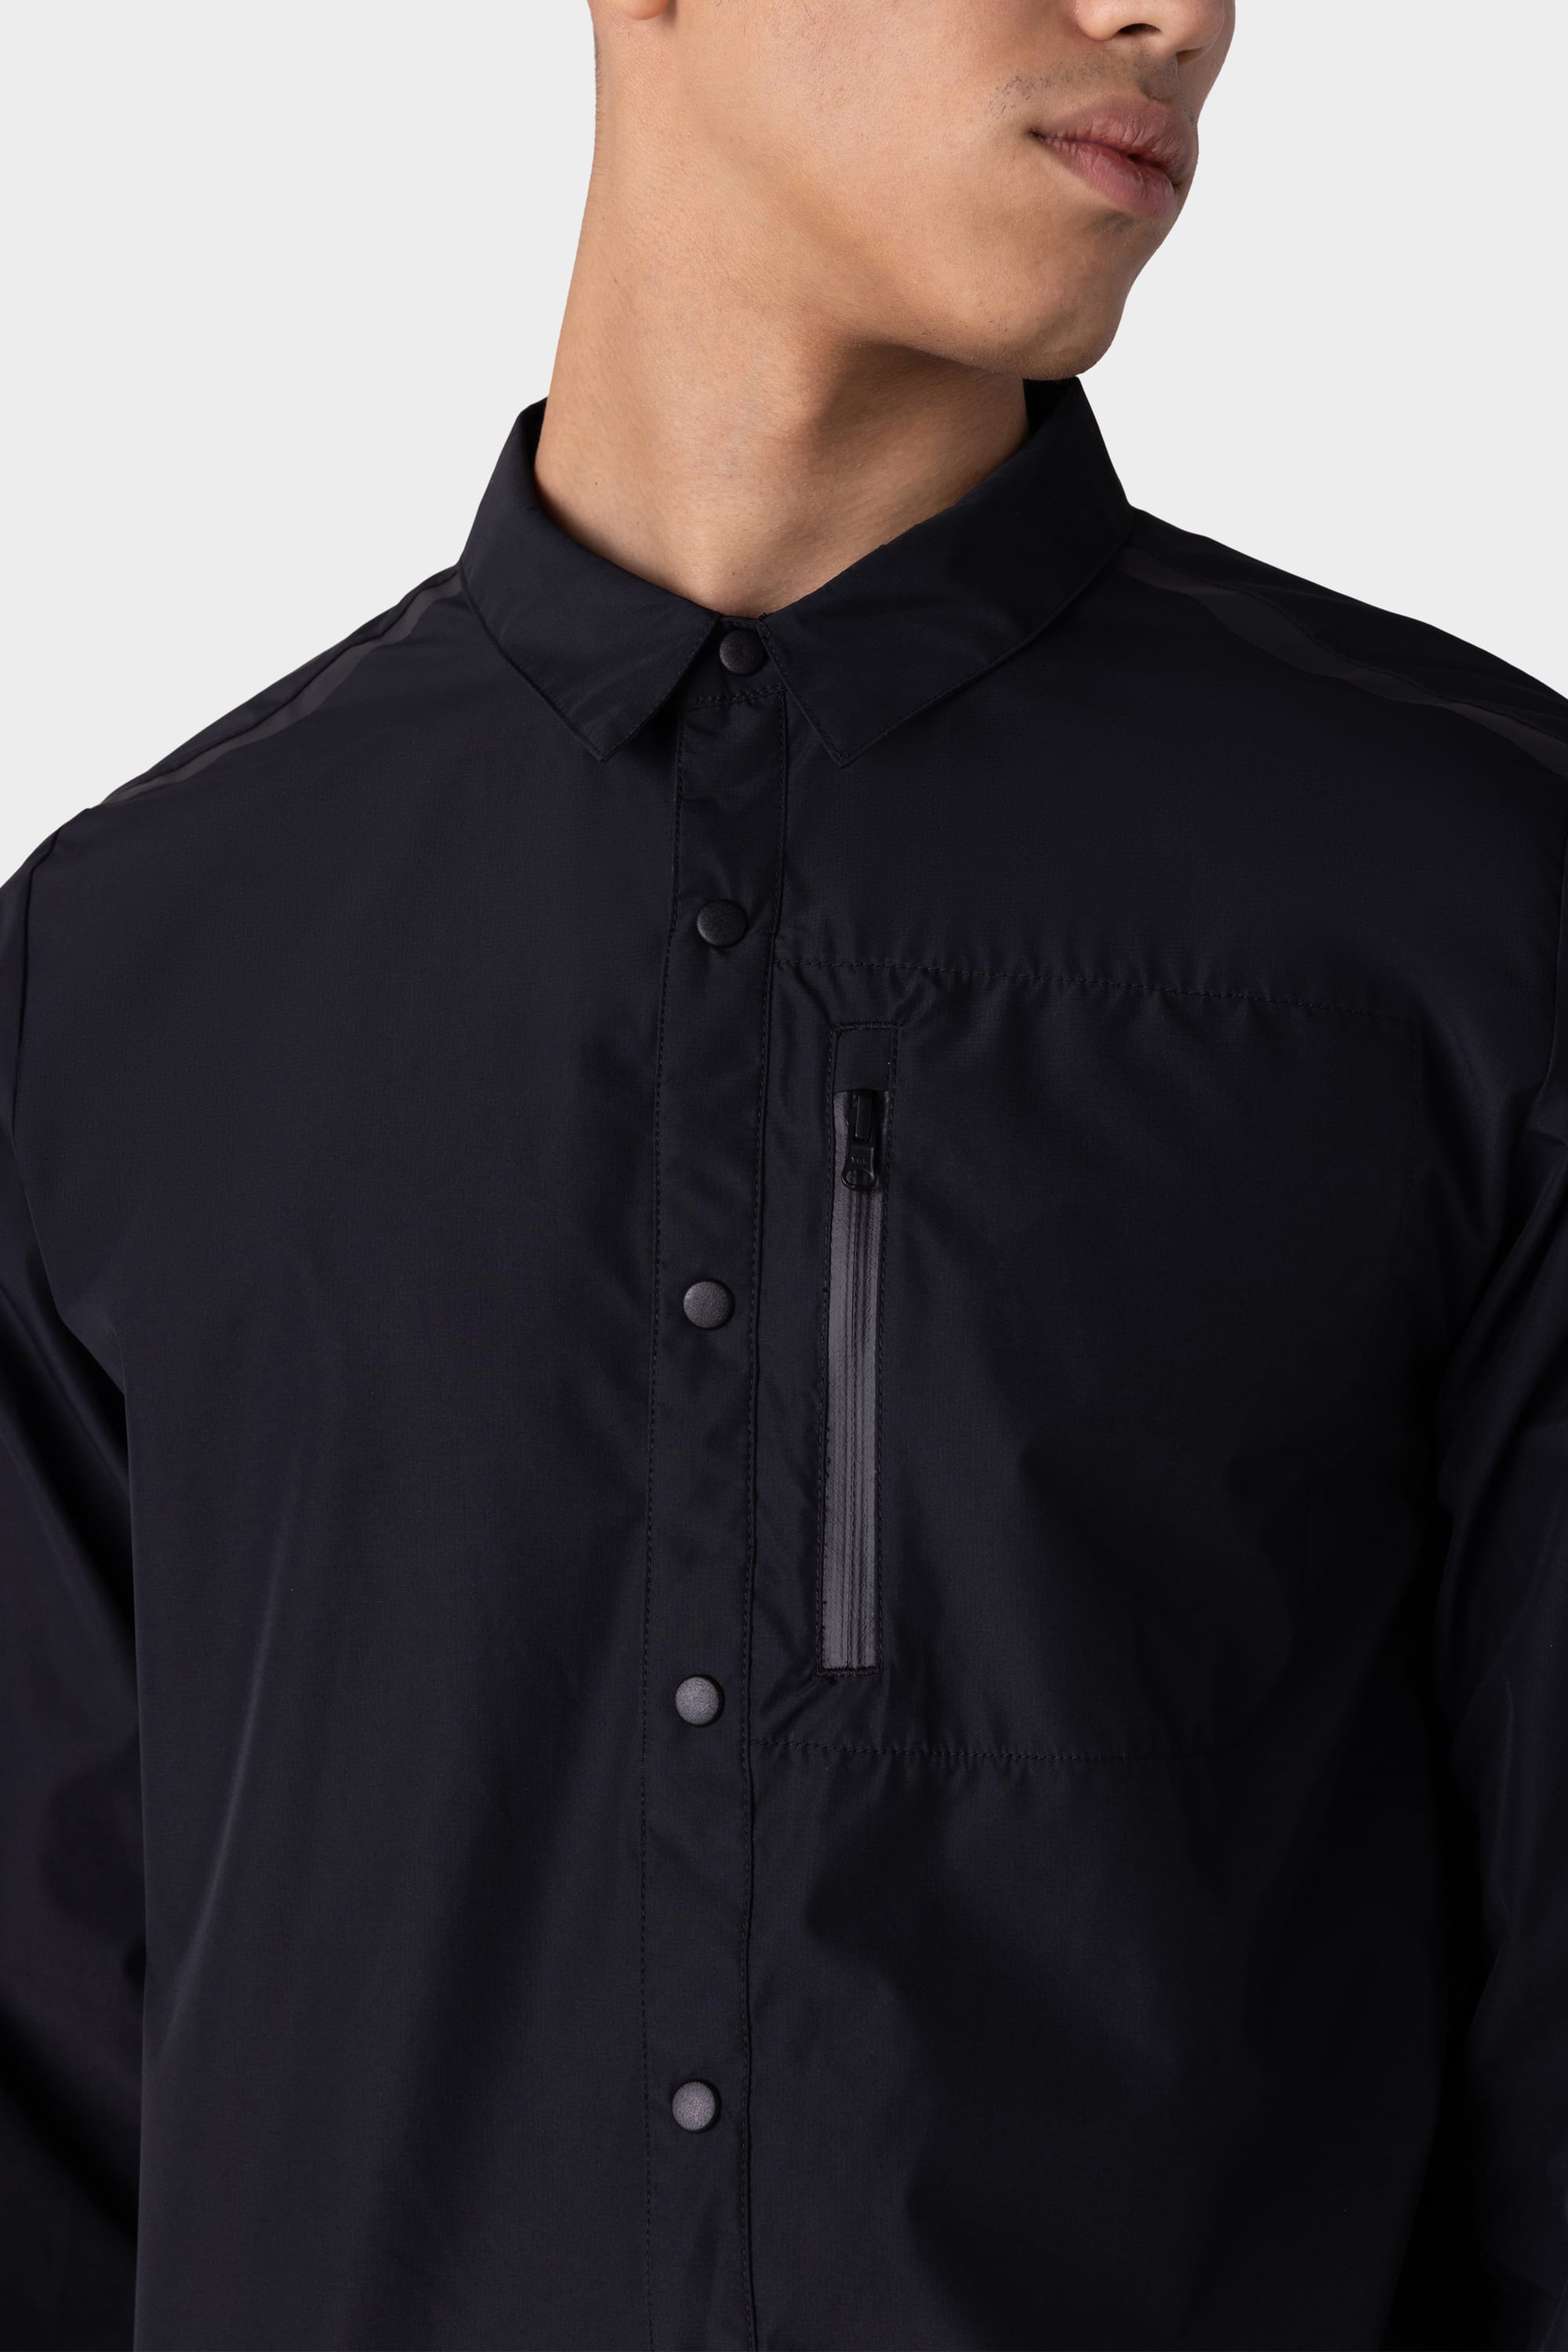 686 Men's GORE-TEX INFINIUM Everywhere Snap-Up Shirt - Black / S